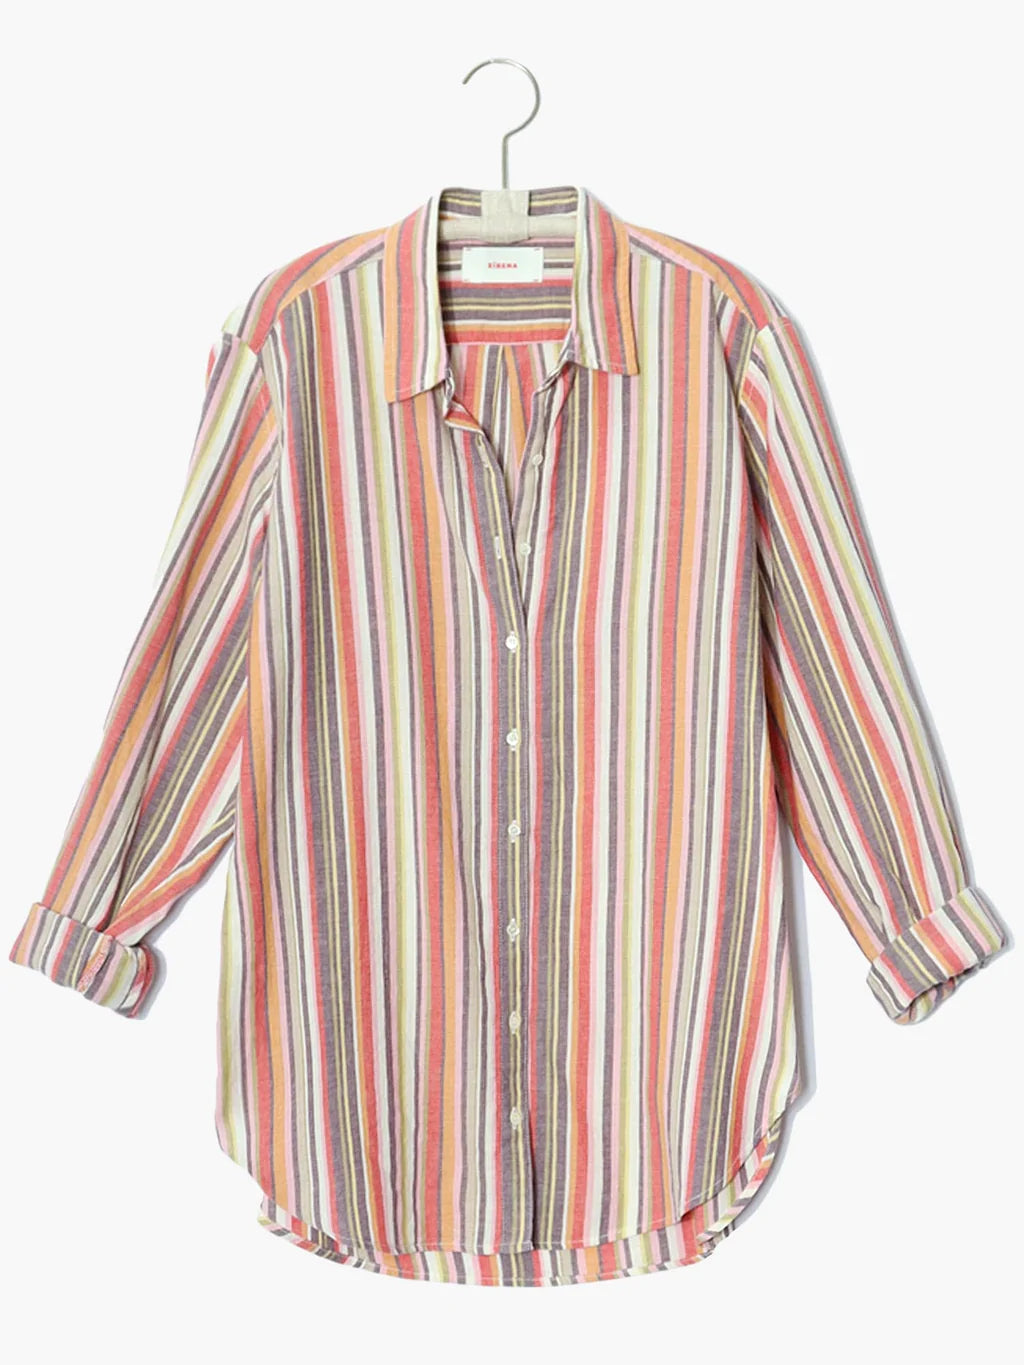 Beau Shirt in Horizon Stripes